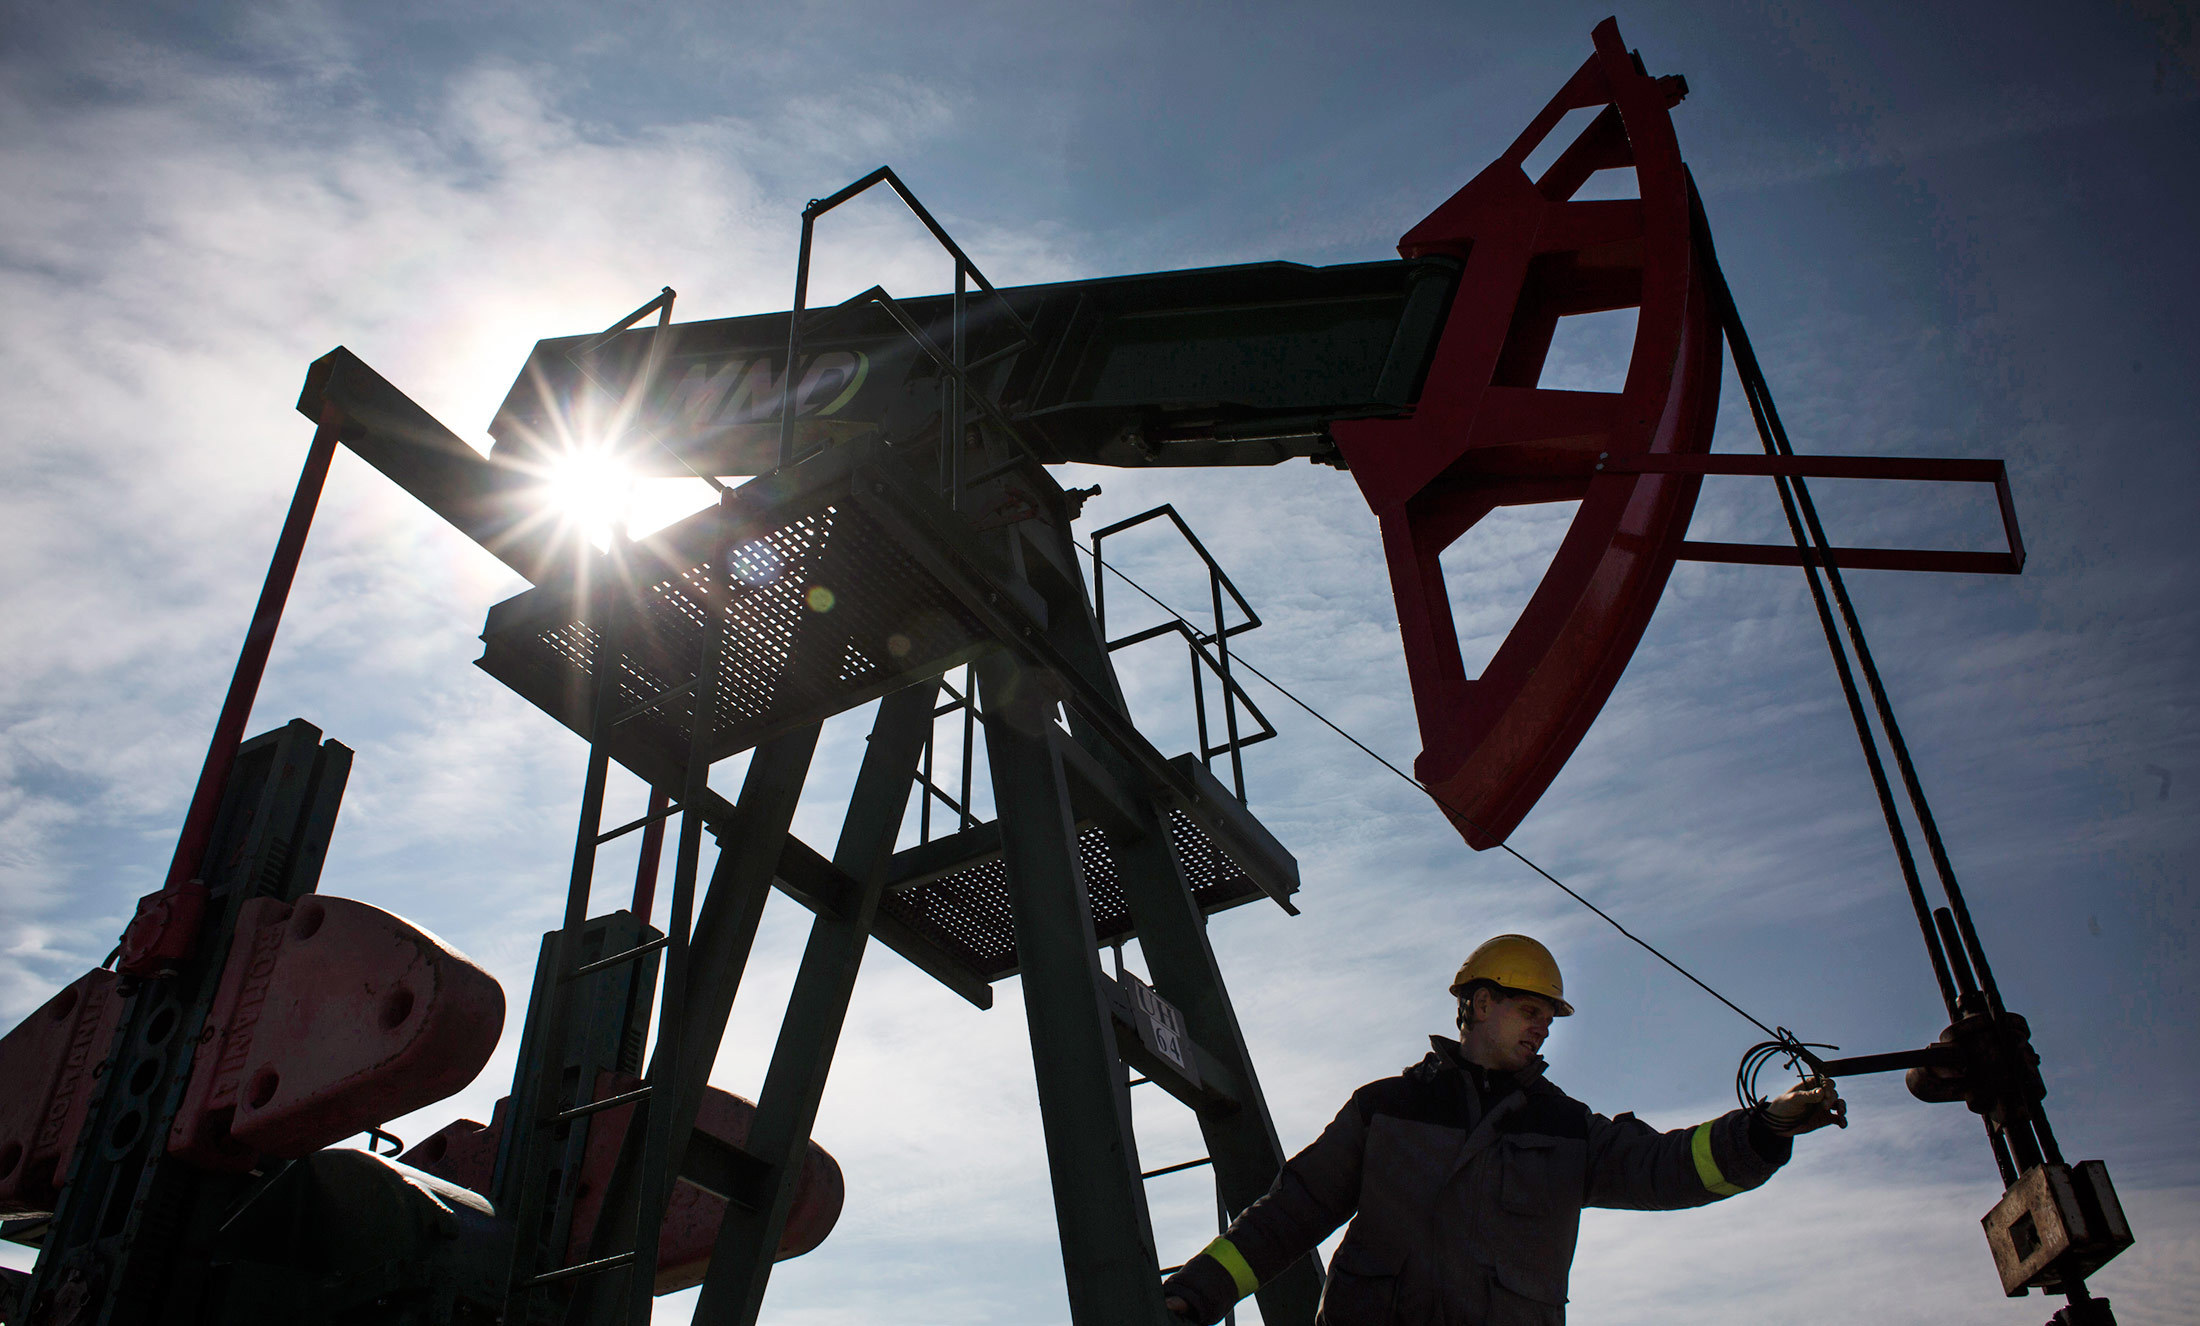 Oil extends losses after report shows surprise U.S. stocks build